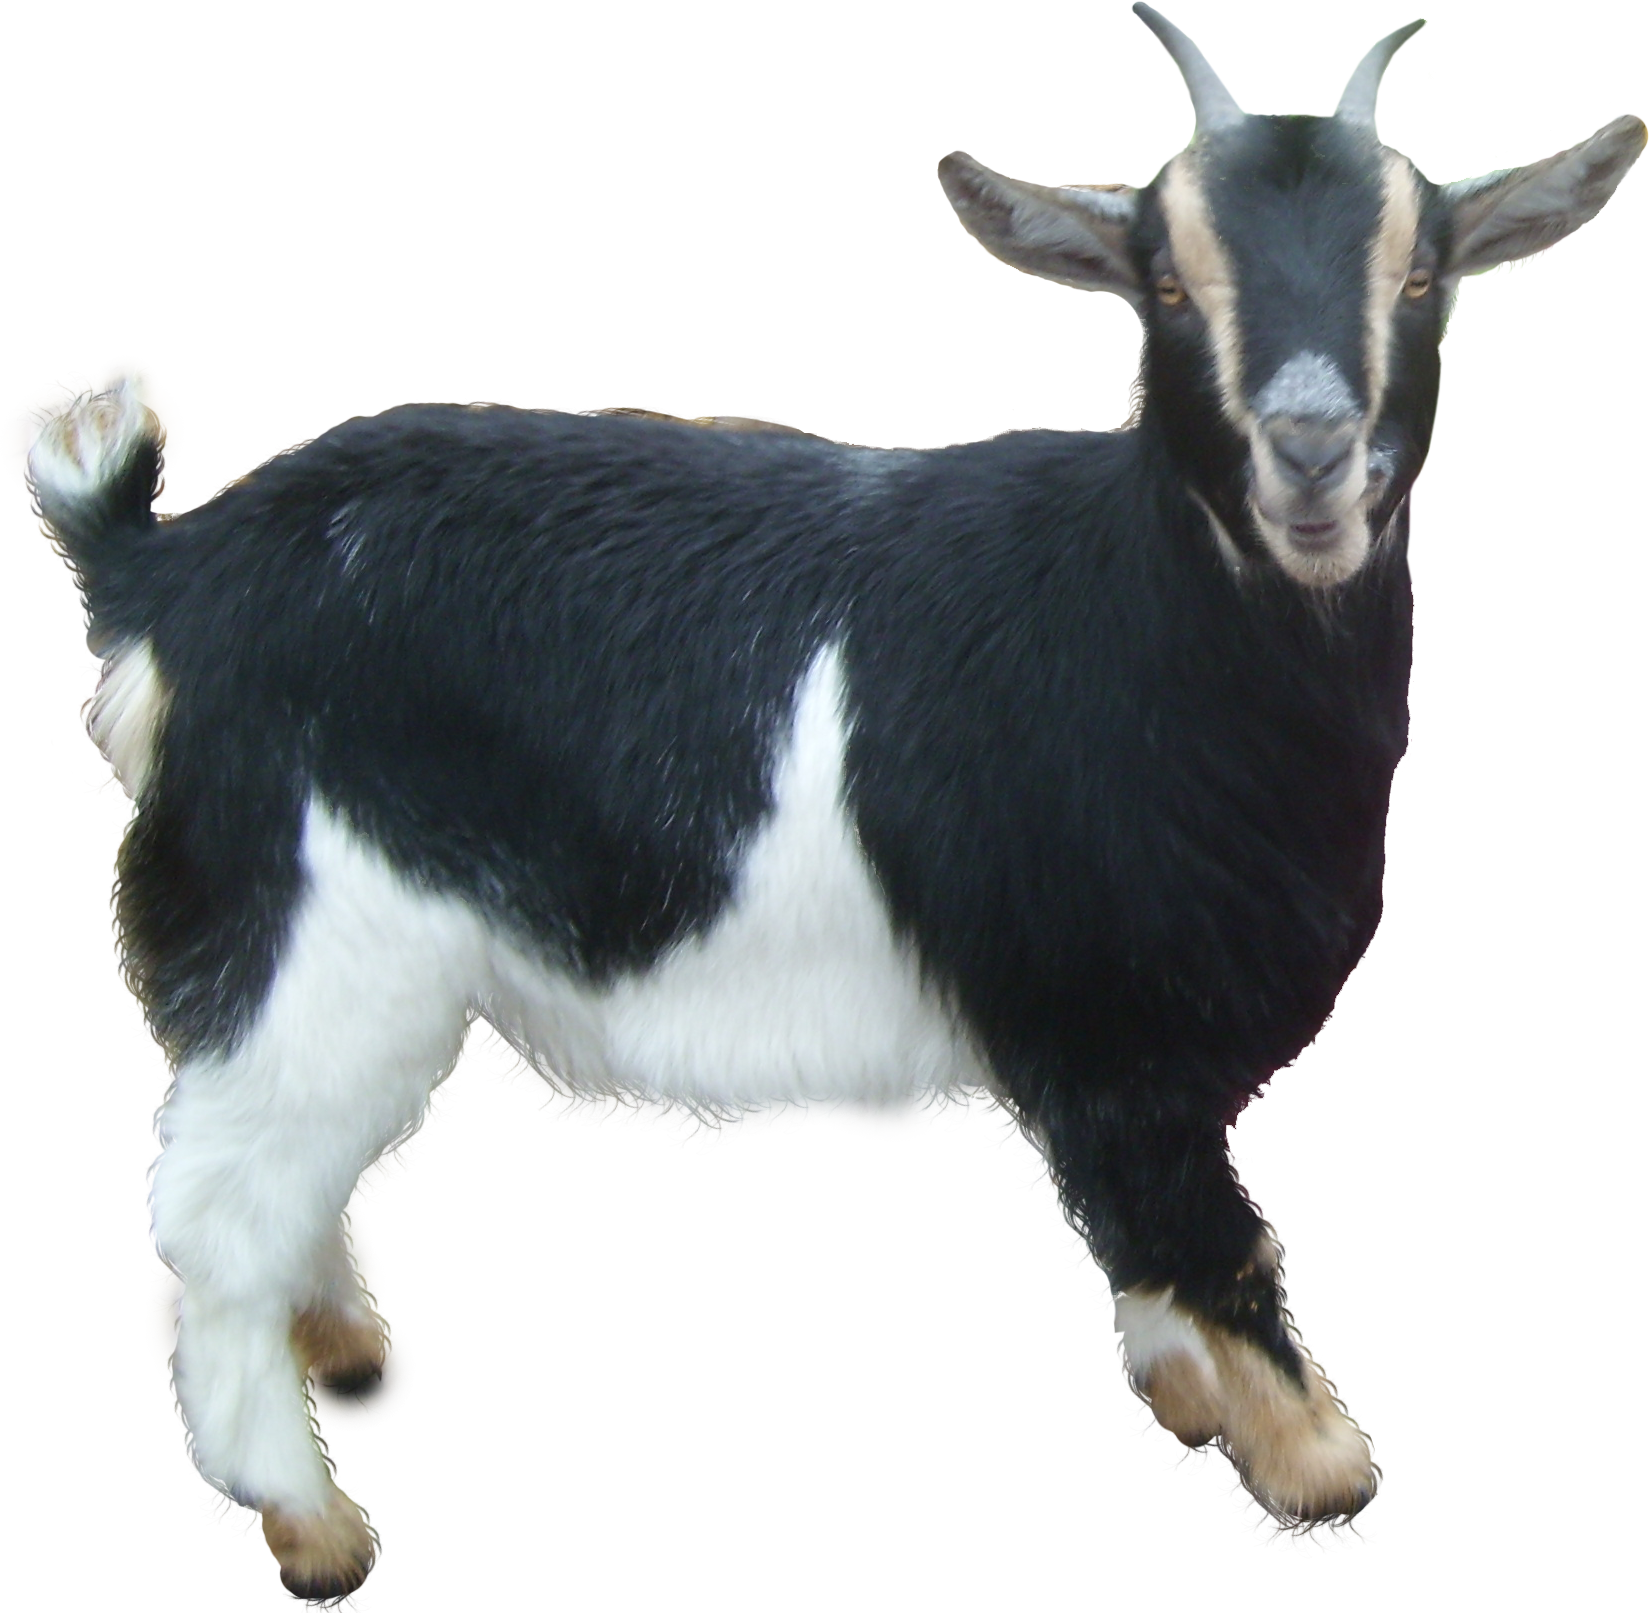 Goat PNG images Download